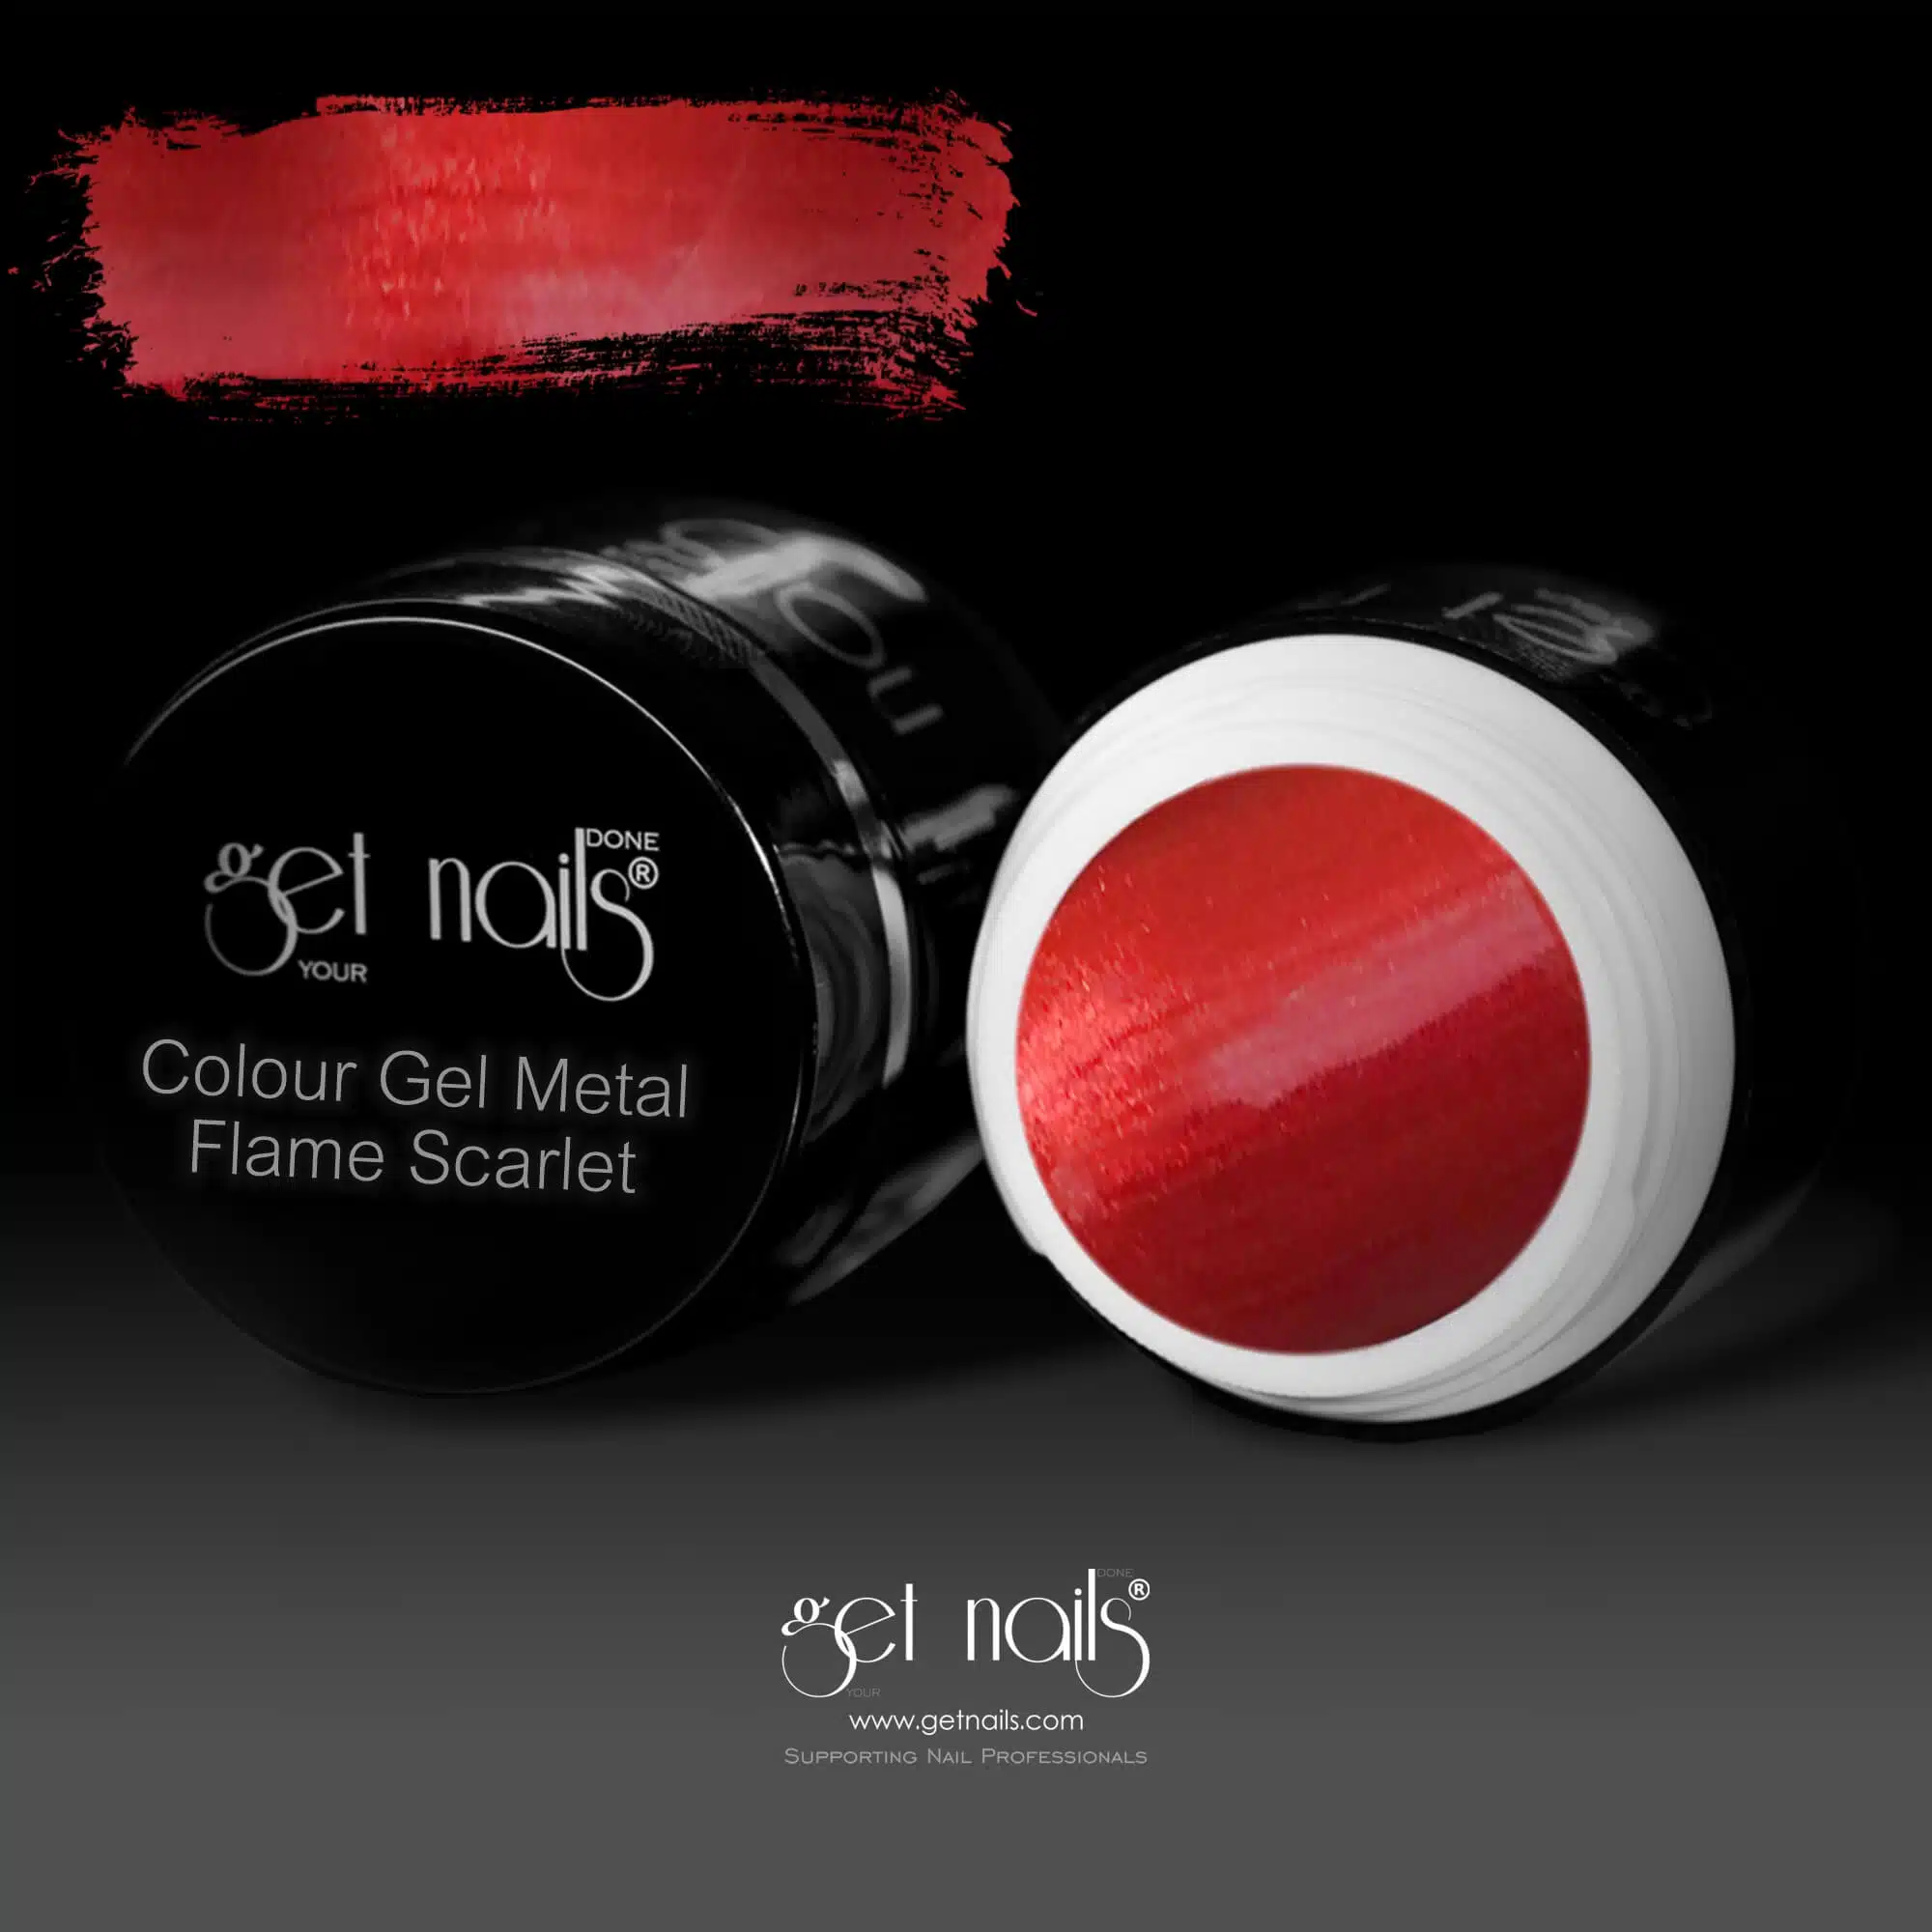 Get Nails Austria - Colour Gel Metal Flame Scarlet 5g